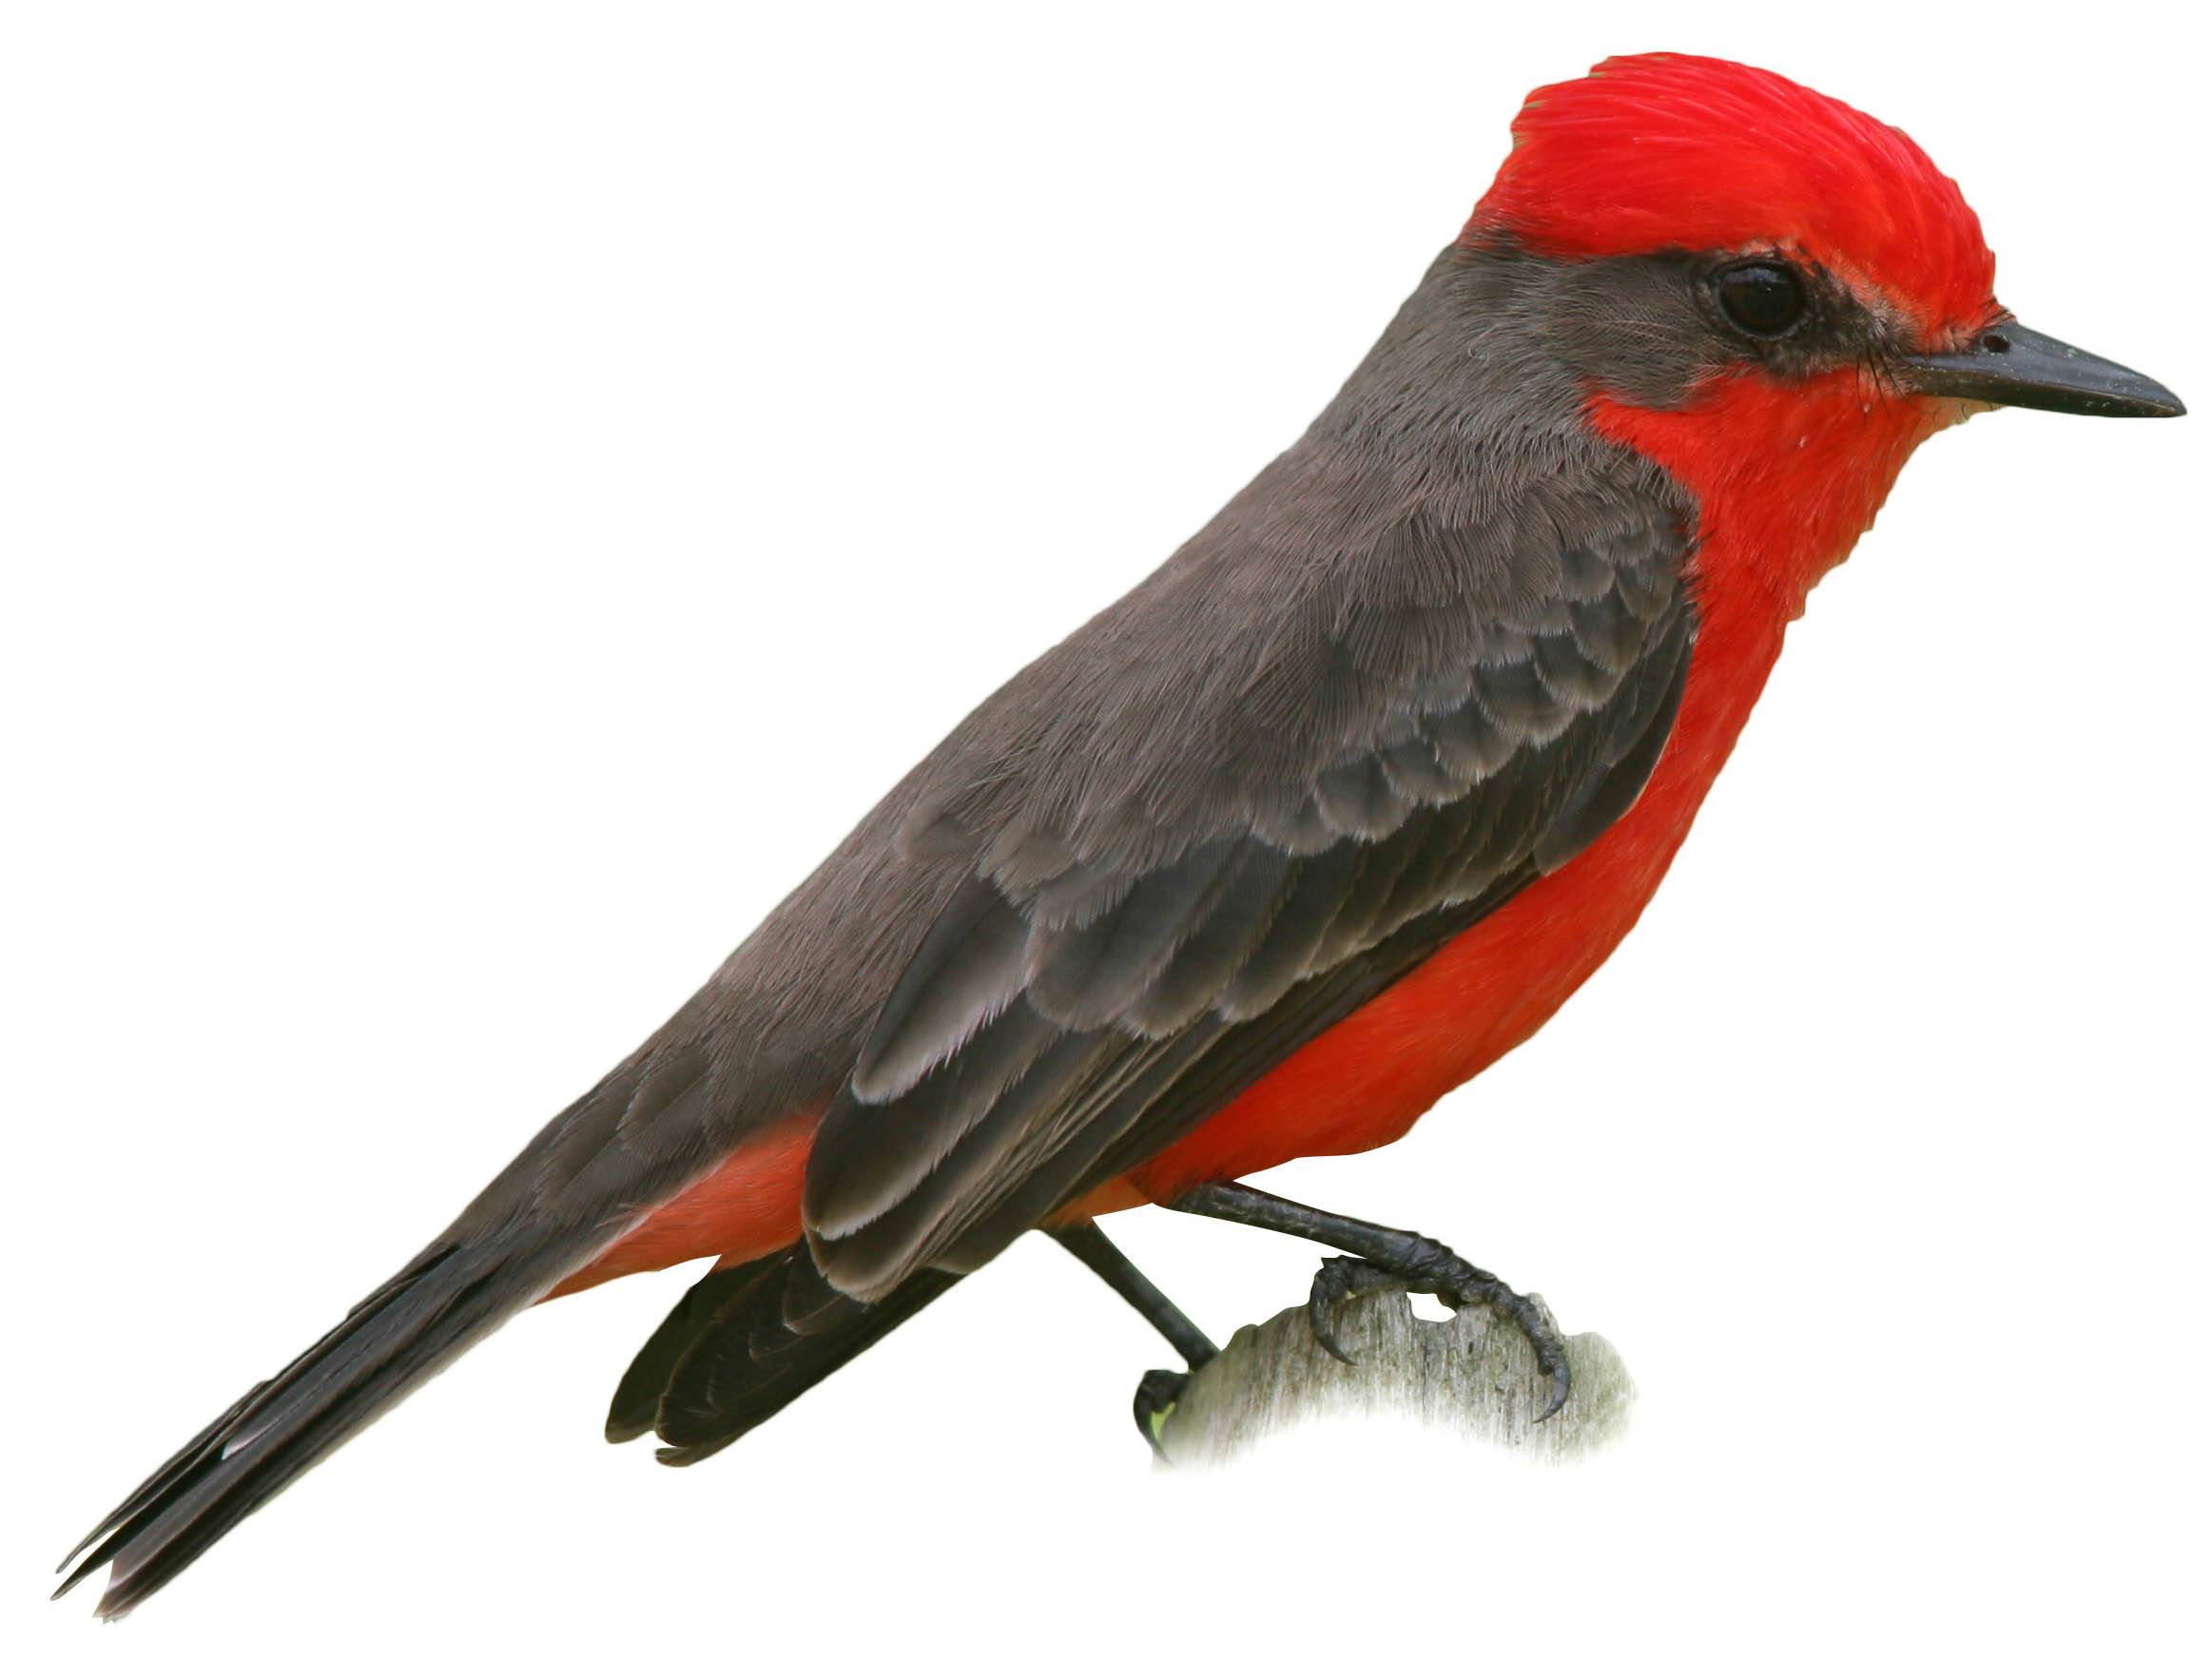 A photo of a Scarlet Flycatcher (Pyrocephalus rubinus), male